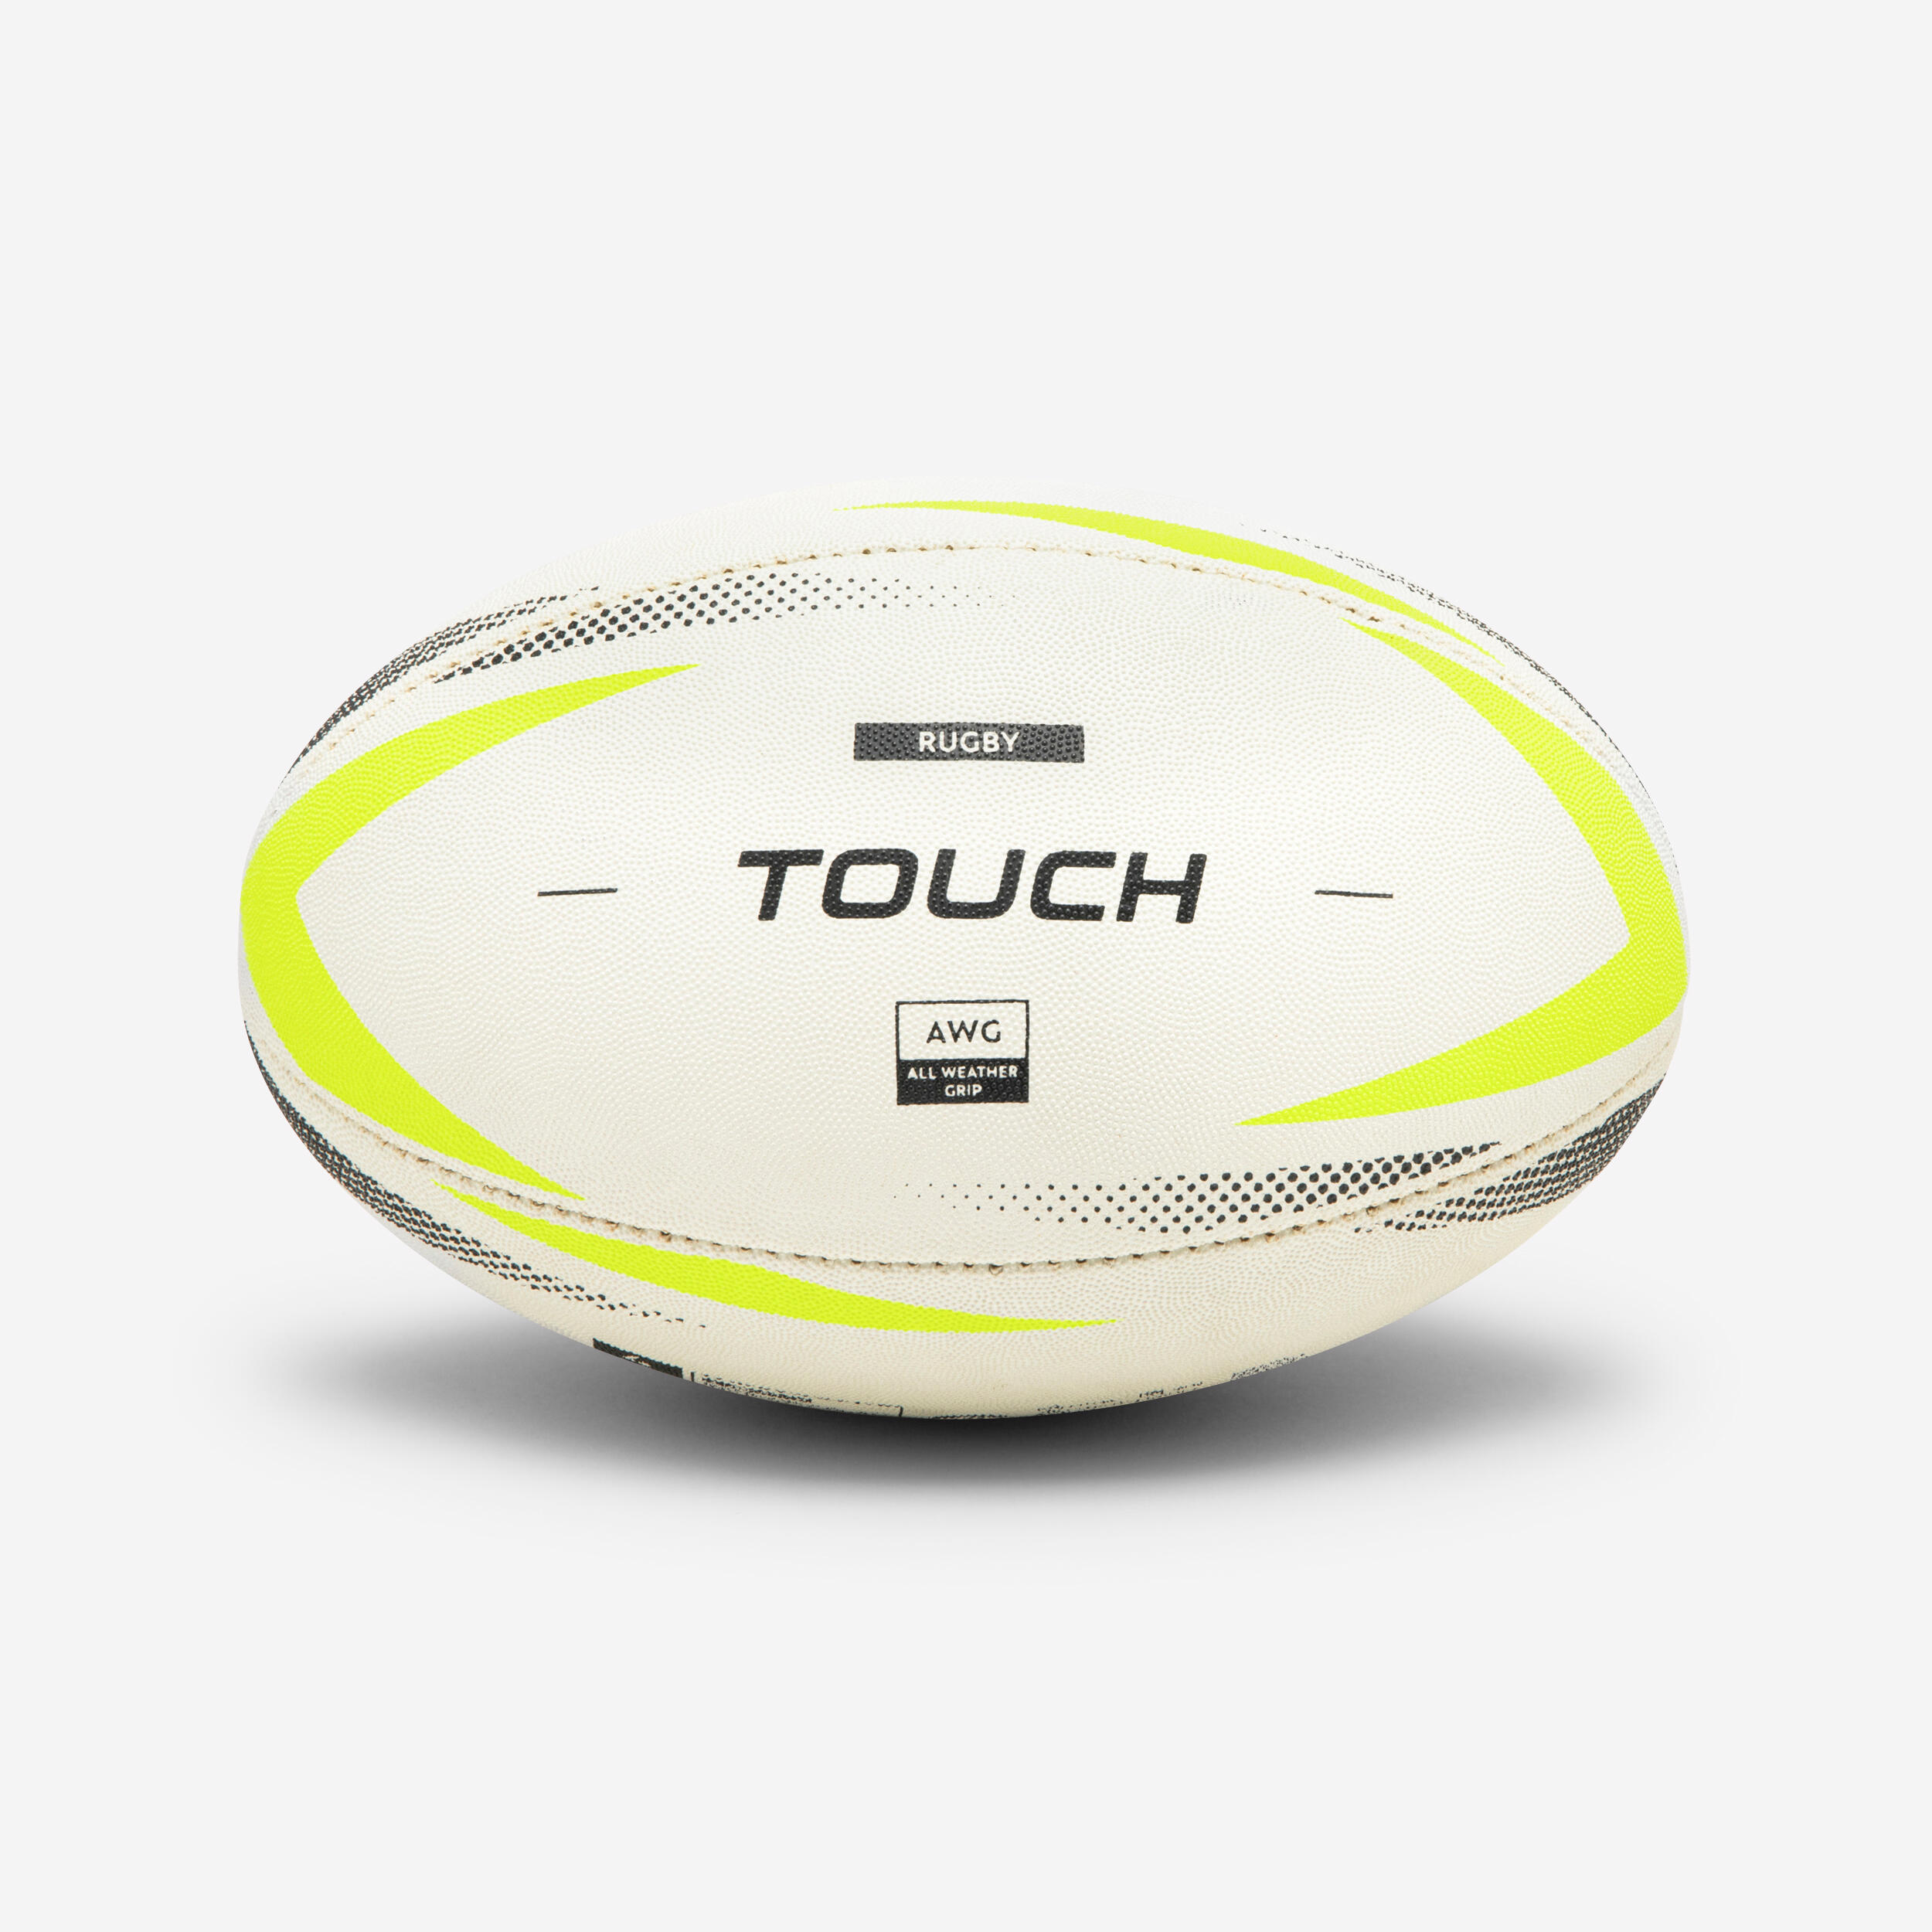 Ballon De Rugby Enfant Taille 3 - Inititation Light Jaune OFFLOAD